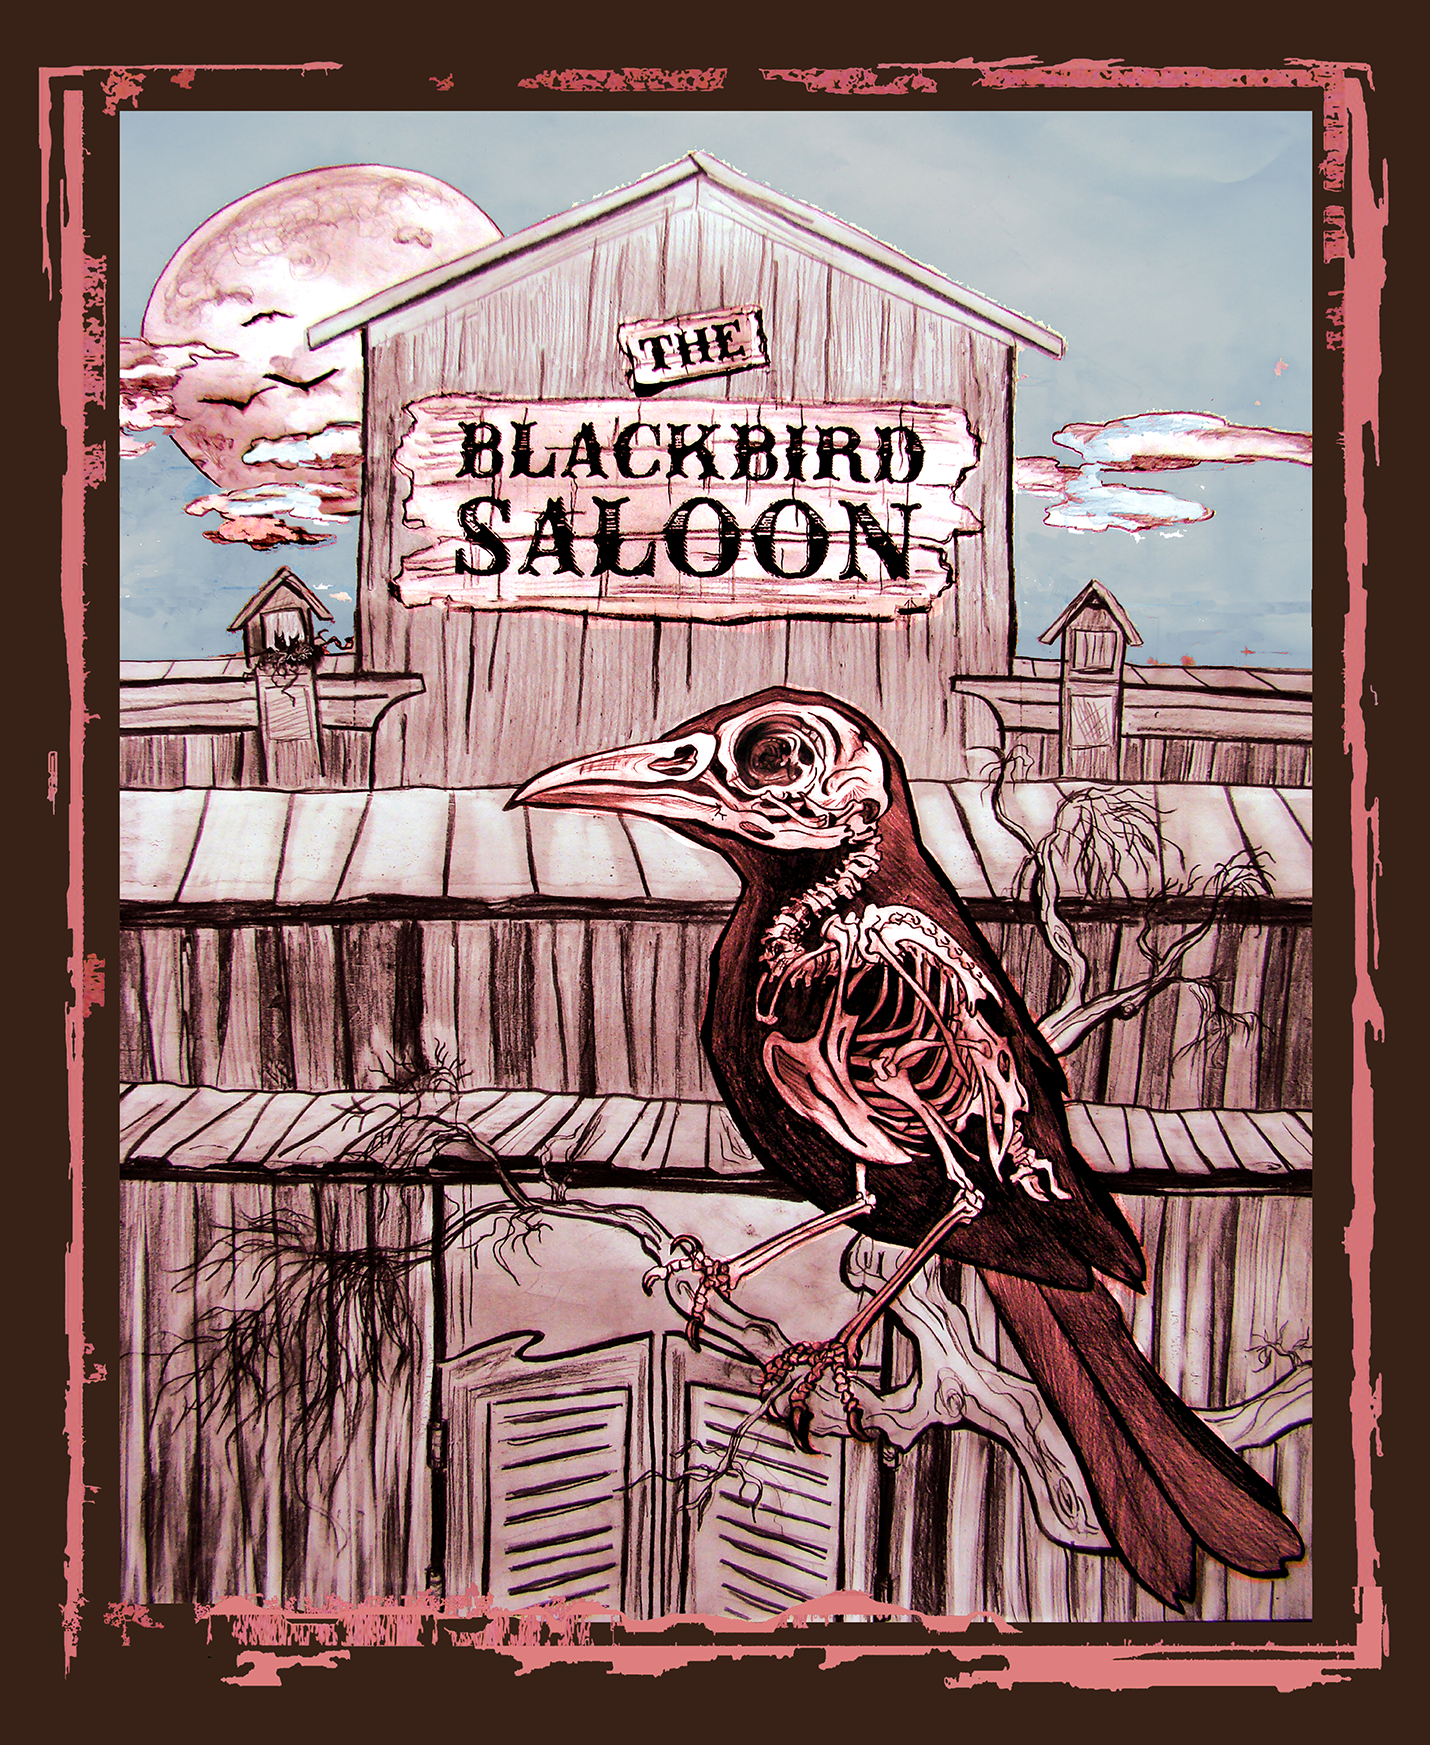 The Black Bird Saloon